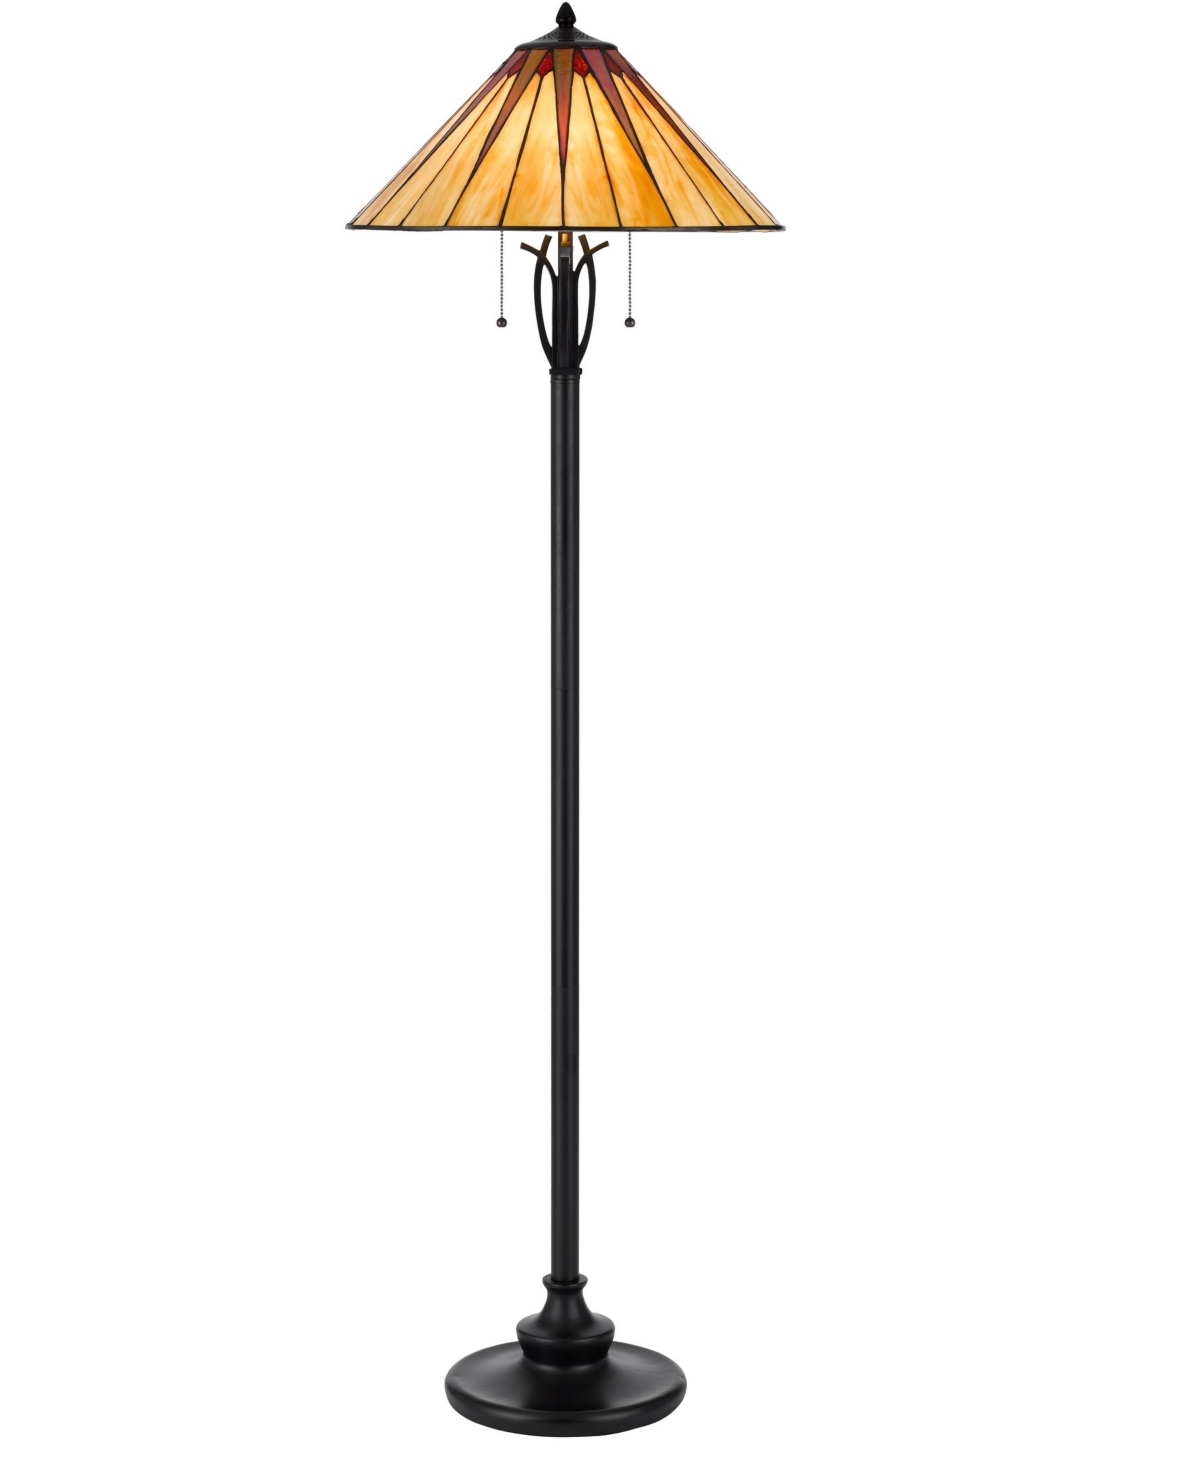 Cal Lighting 61" Height Metal And Resin Floor Lamp In Dark Bronze